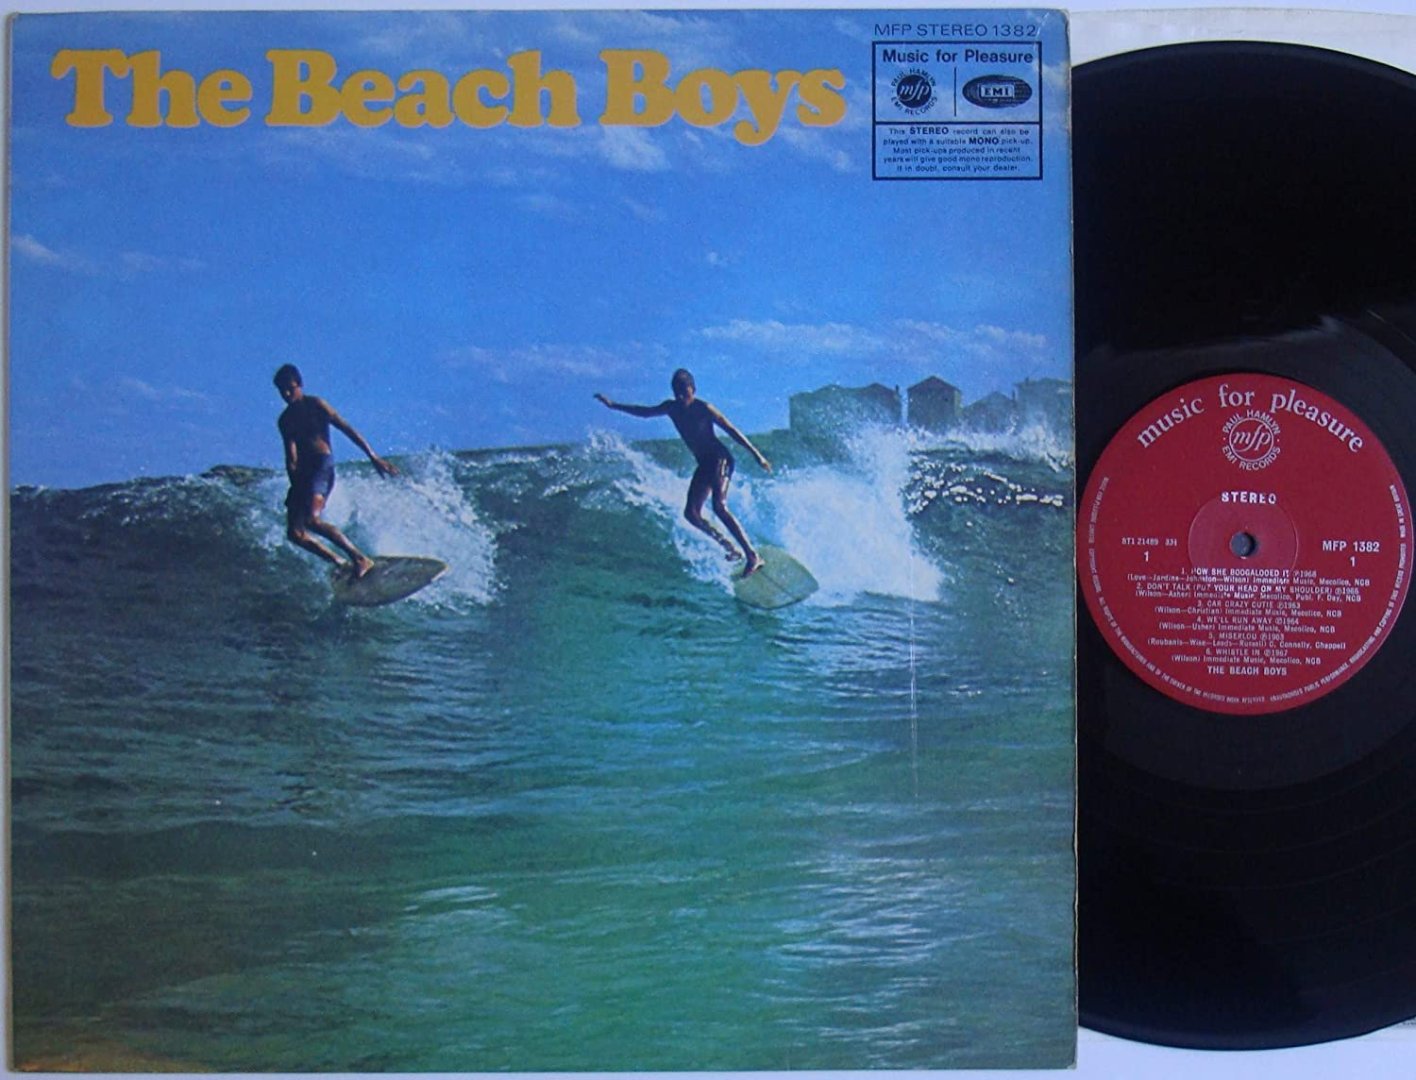 best ever Beach boys record (1970)